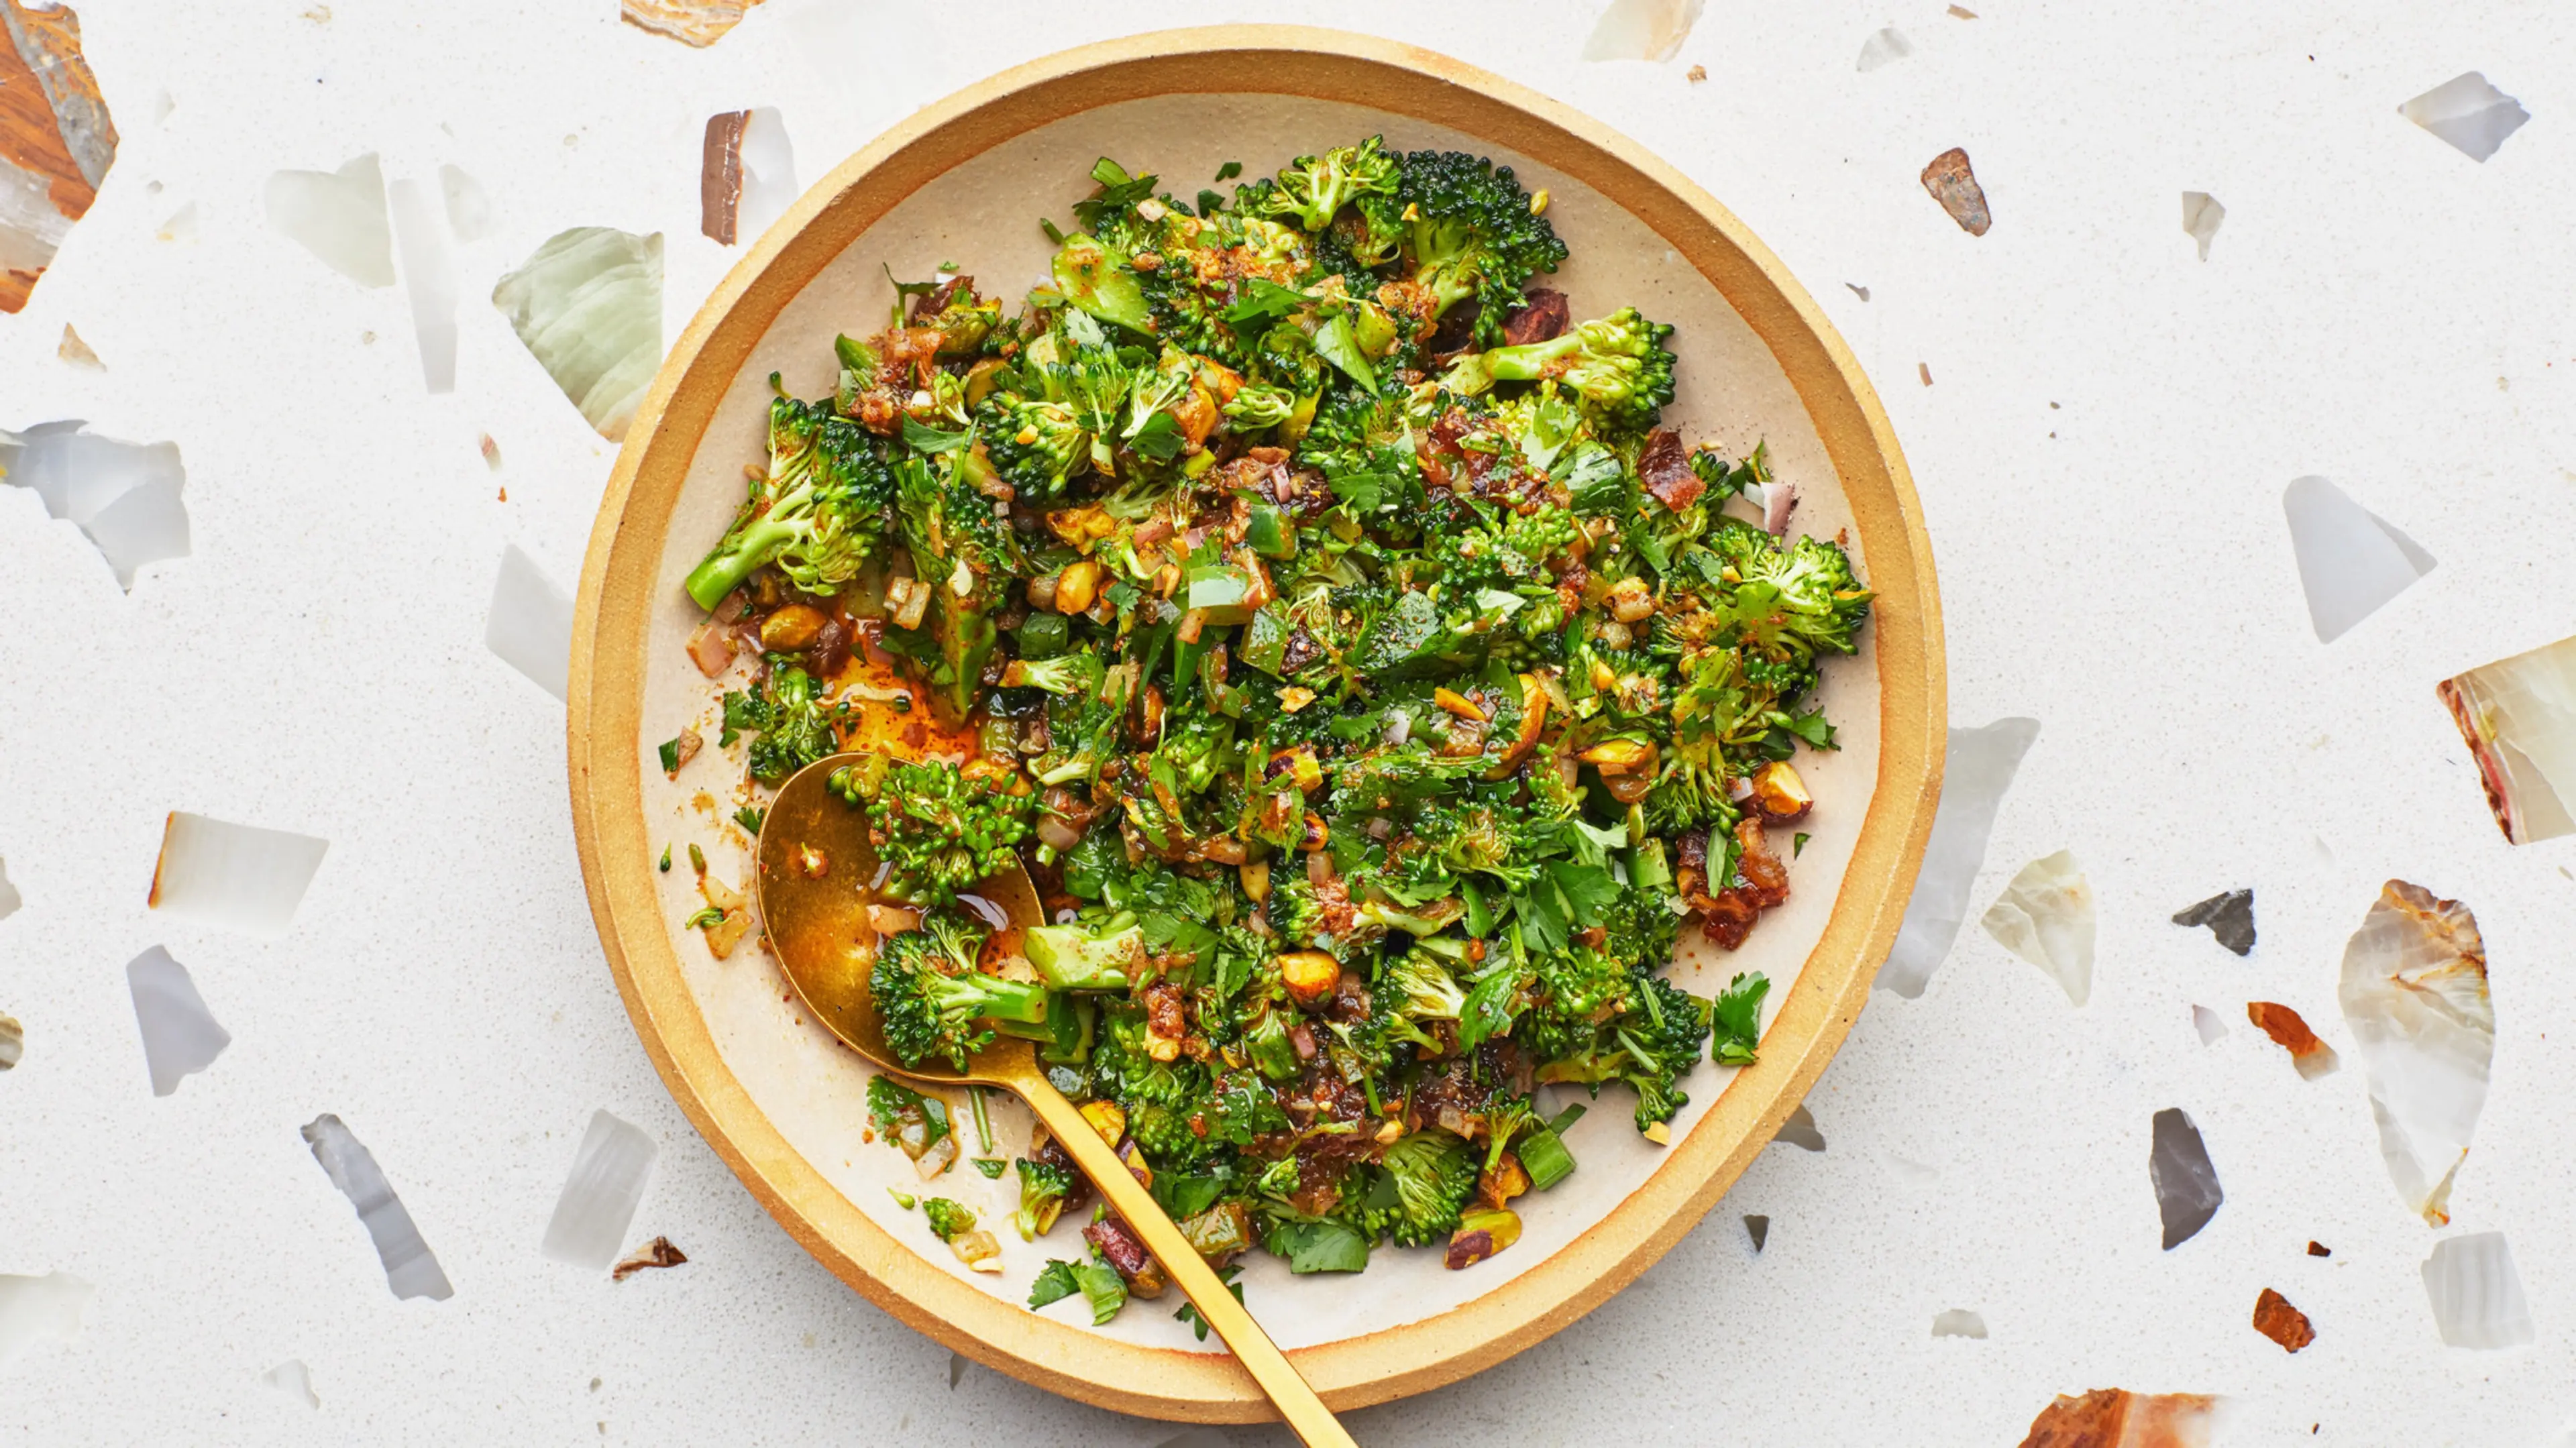 Broccoli Spoon Salad With Warm Vinaigrette